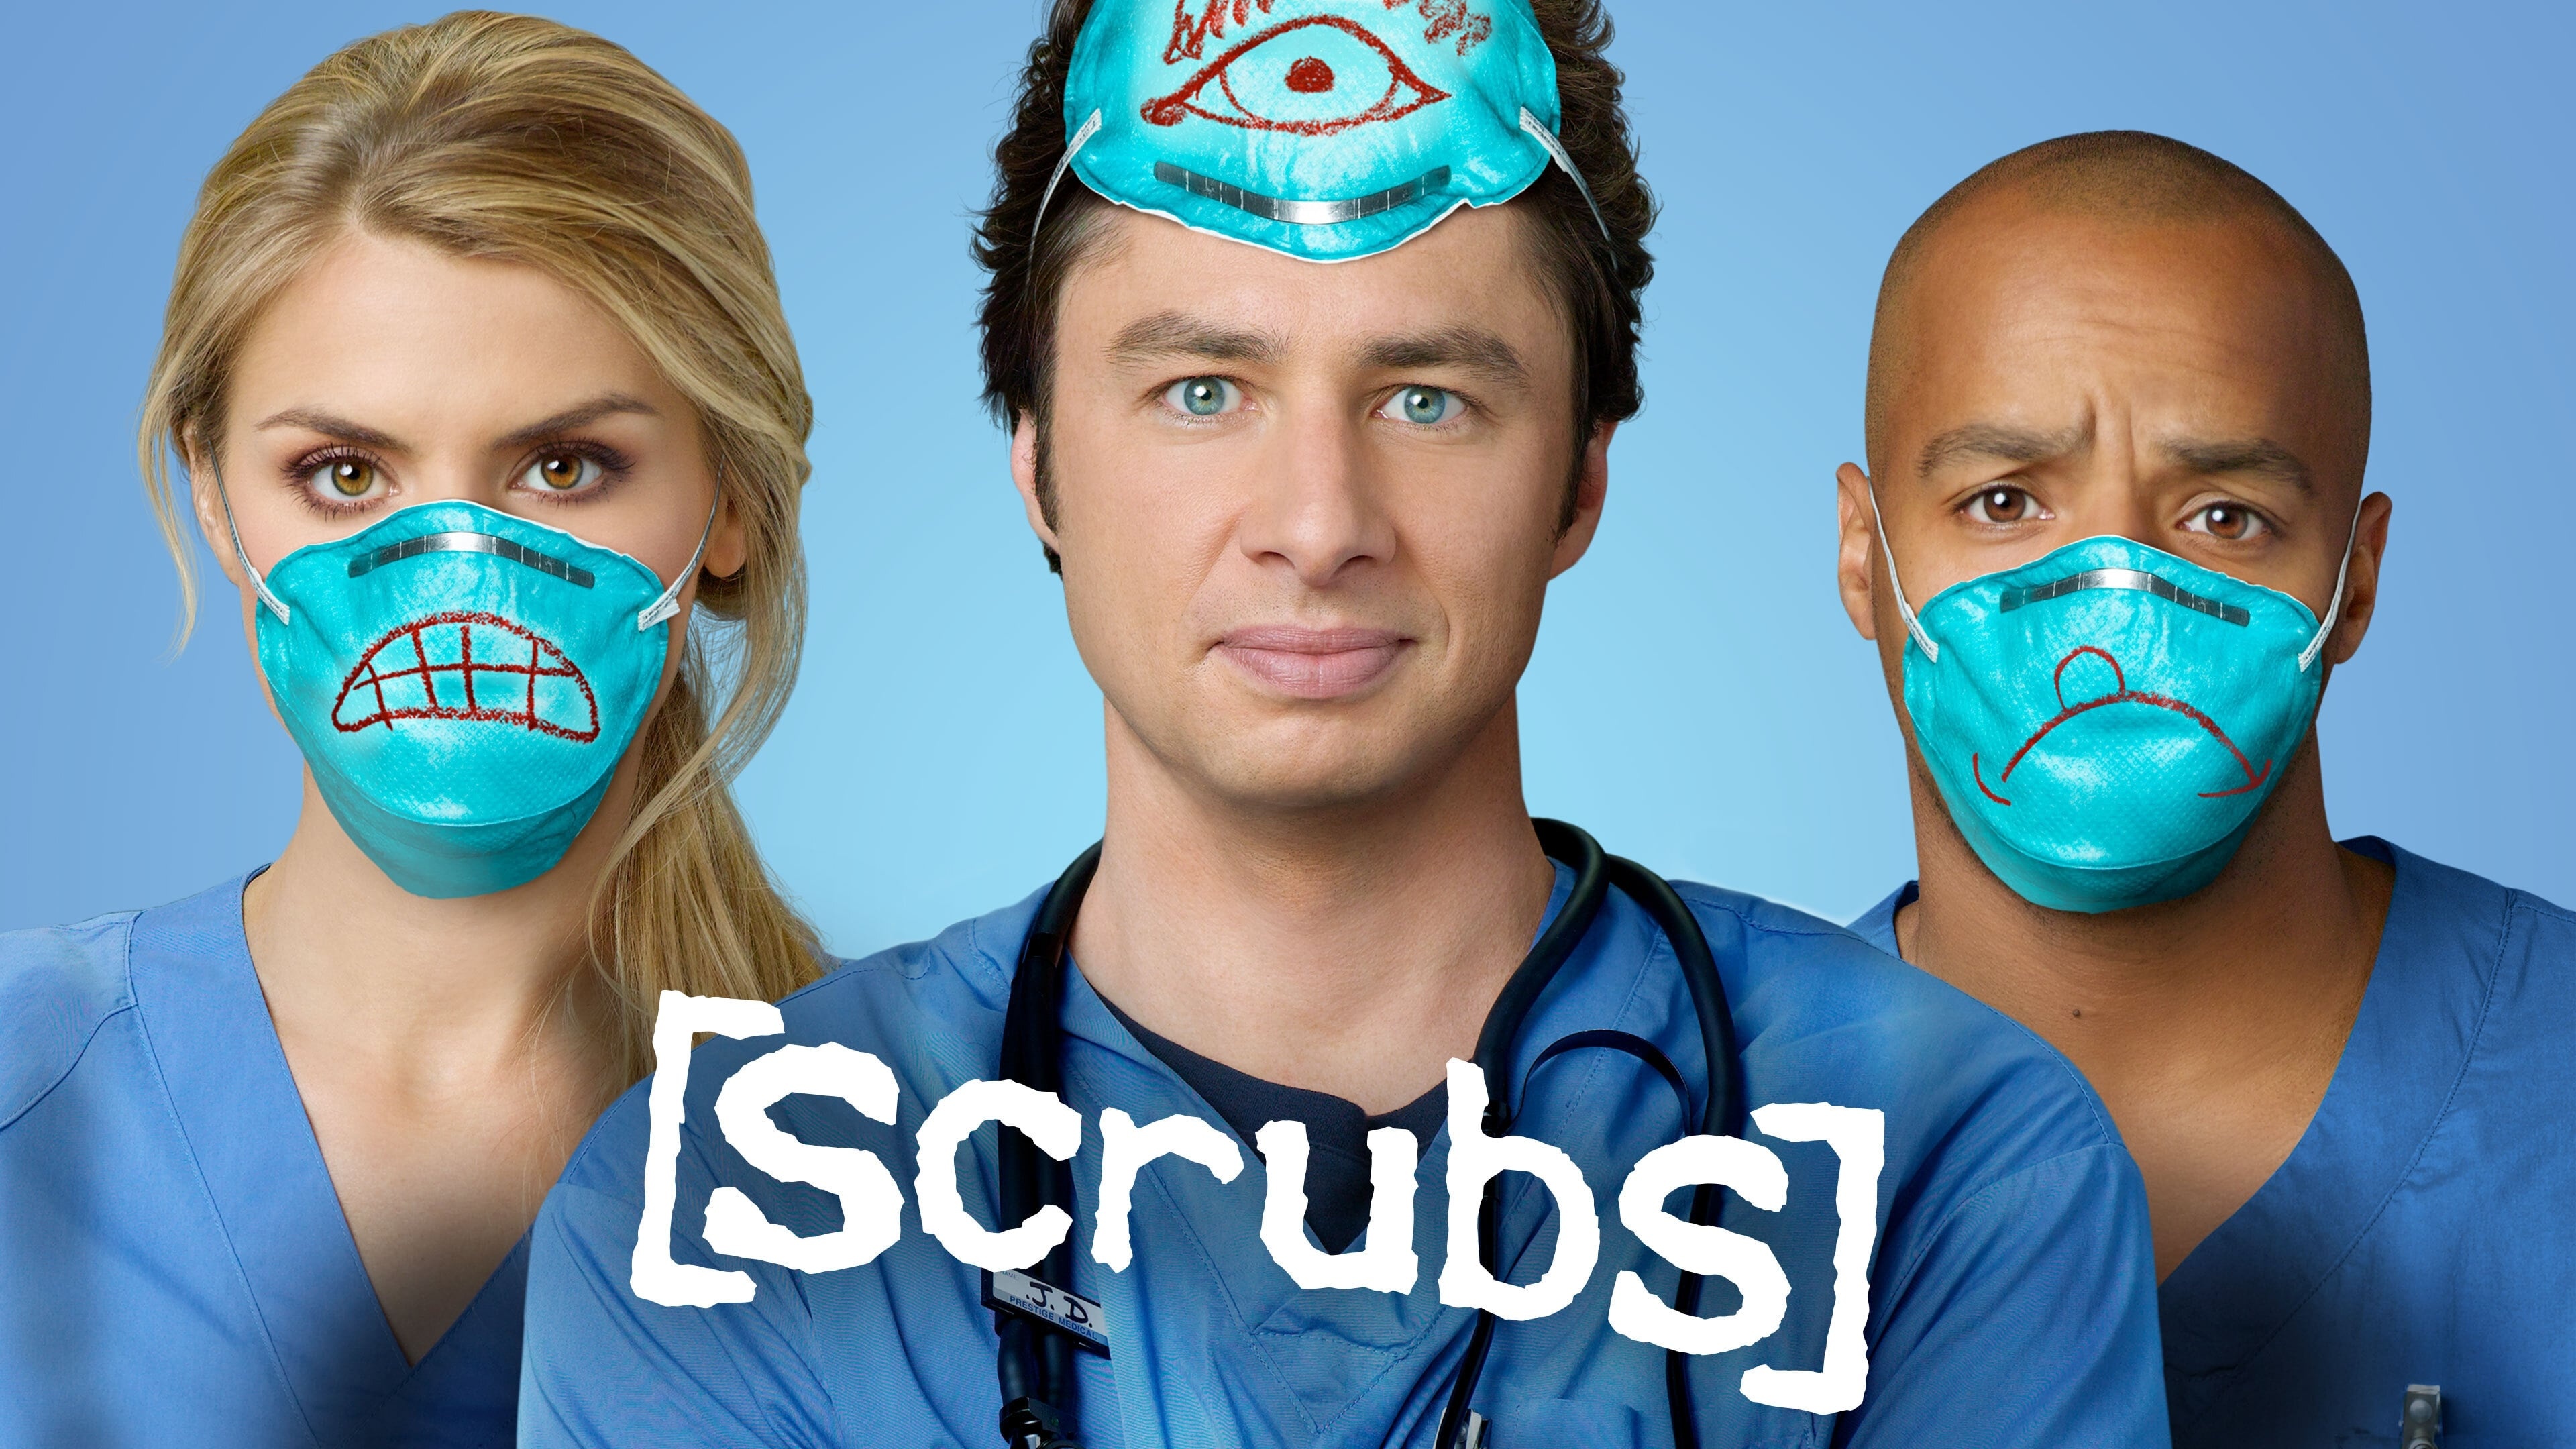 Scrubs (TV Series): Zach Braff as John Michael "J.D." Dorian, Eliza Coupe as Denise Mahoney, Season 9. 3840x2160 4K Background.